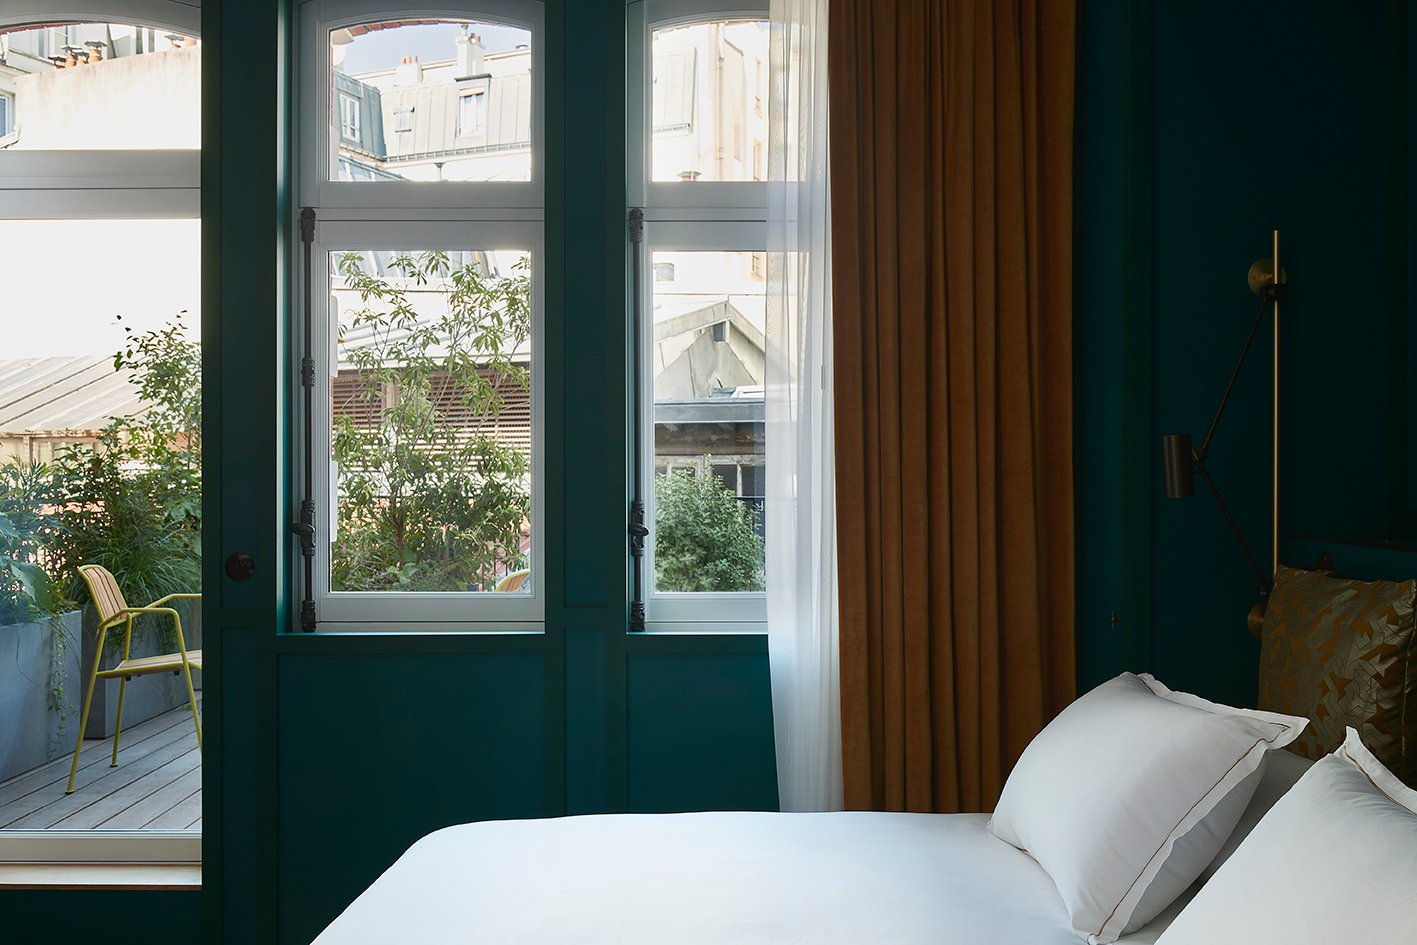 Design boutique hotel Paris France Pigalle Le Ballu 4* original room with balcony